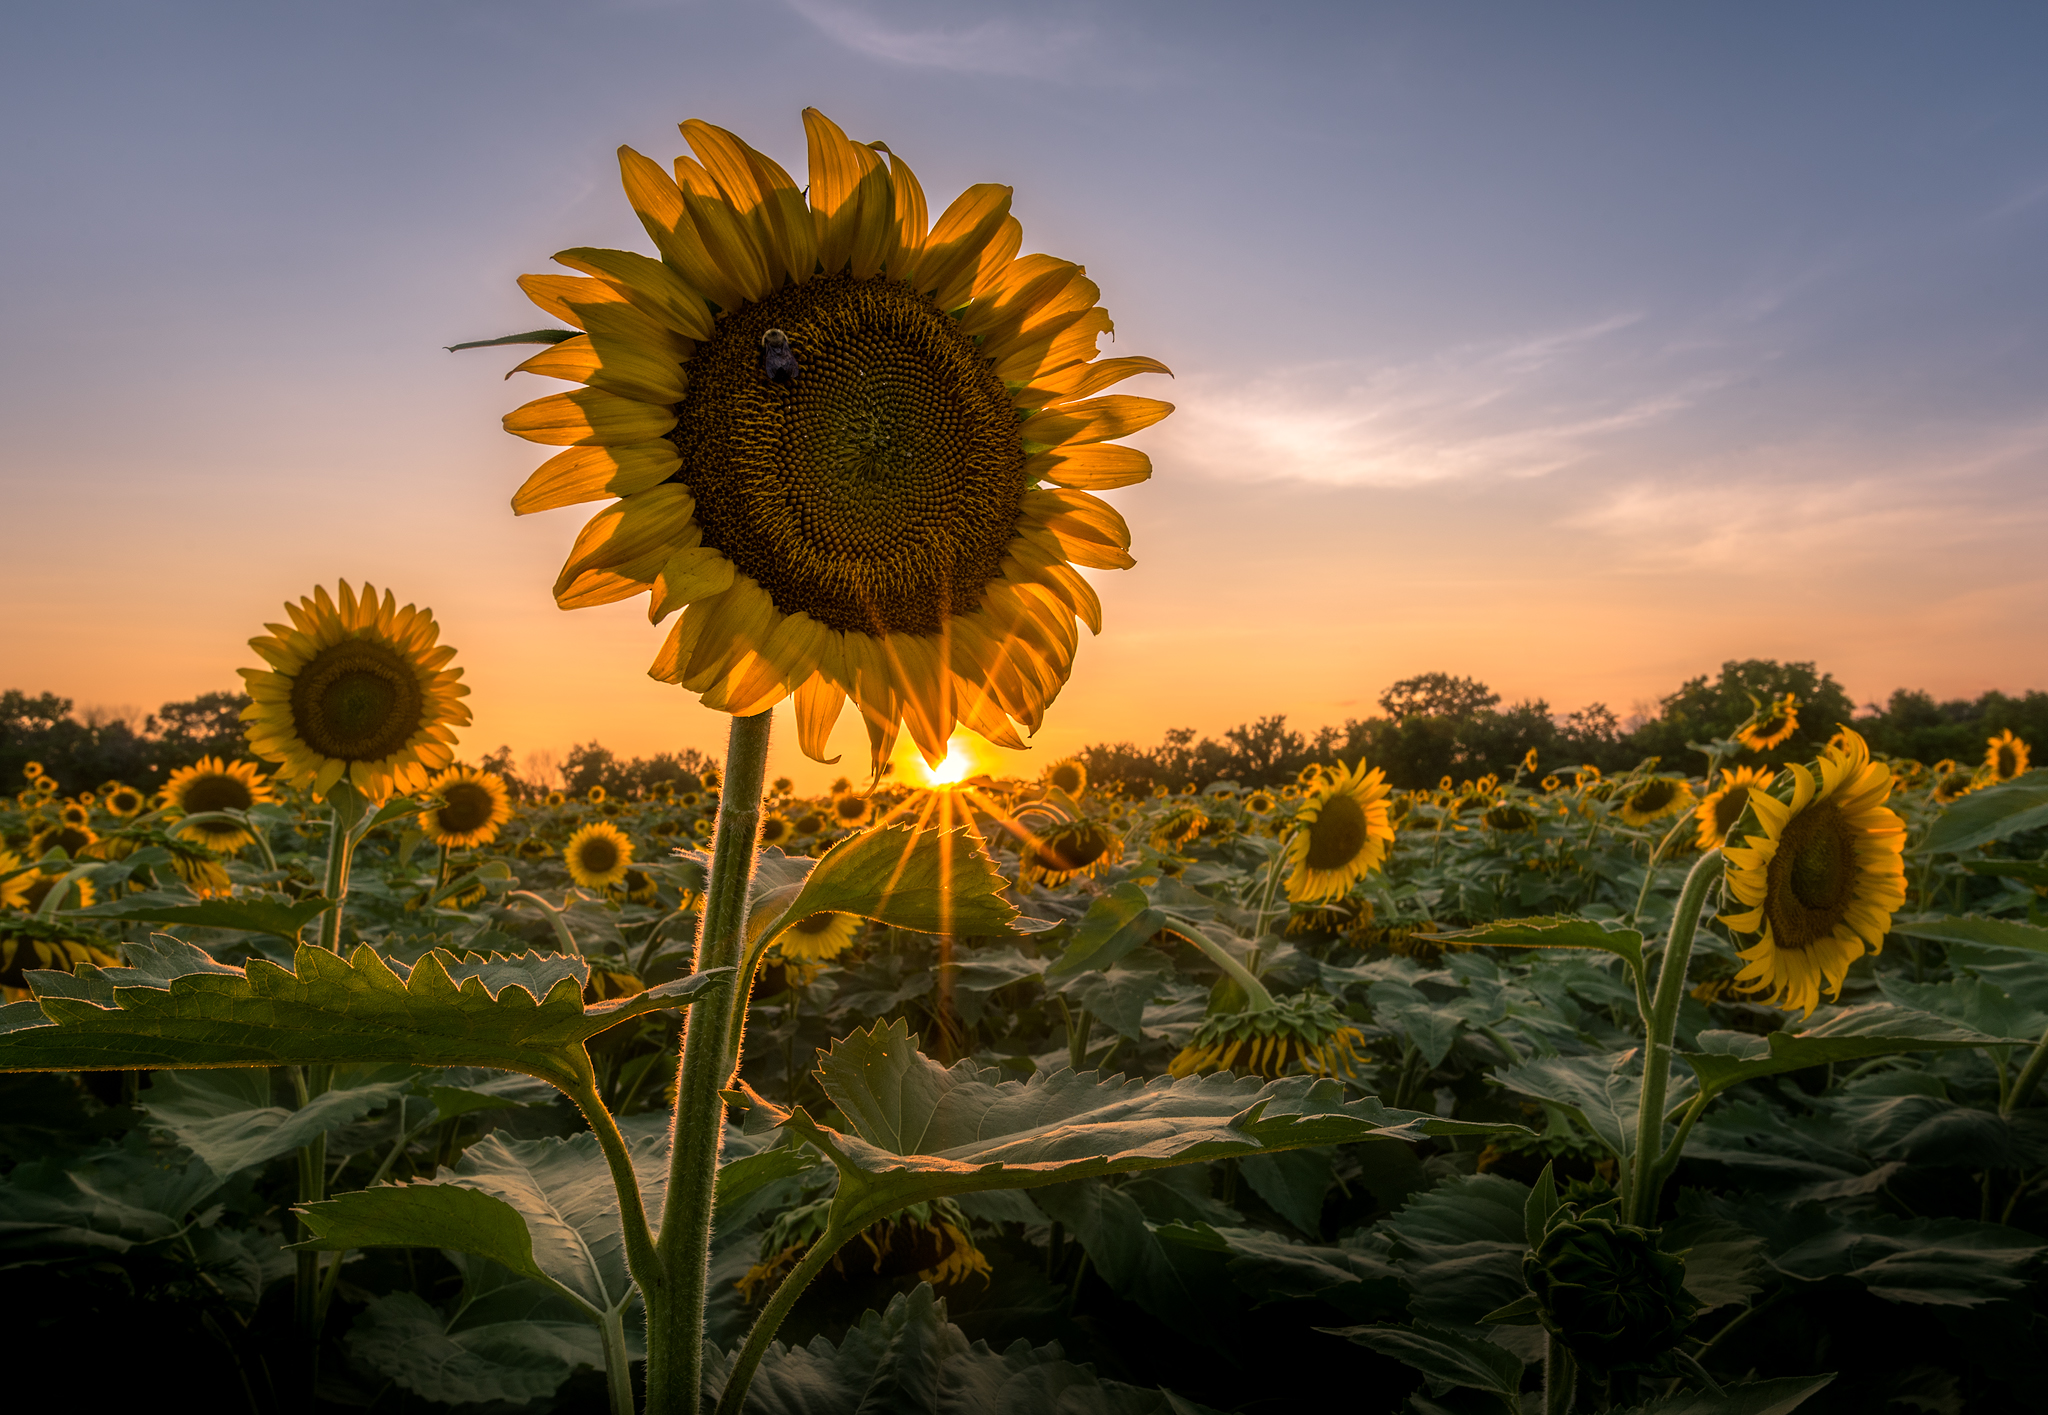 Sunflower Sunburst